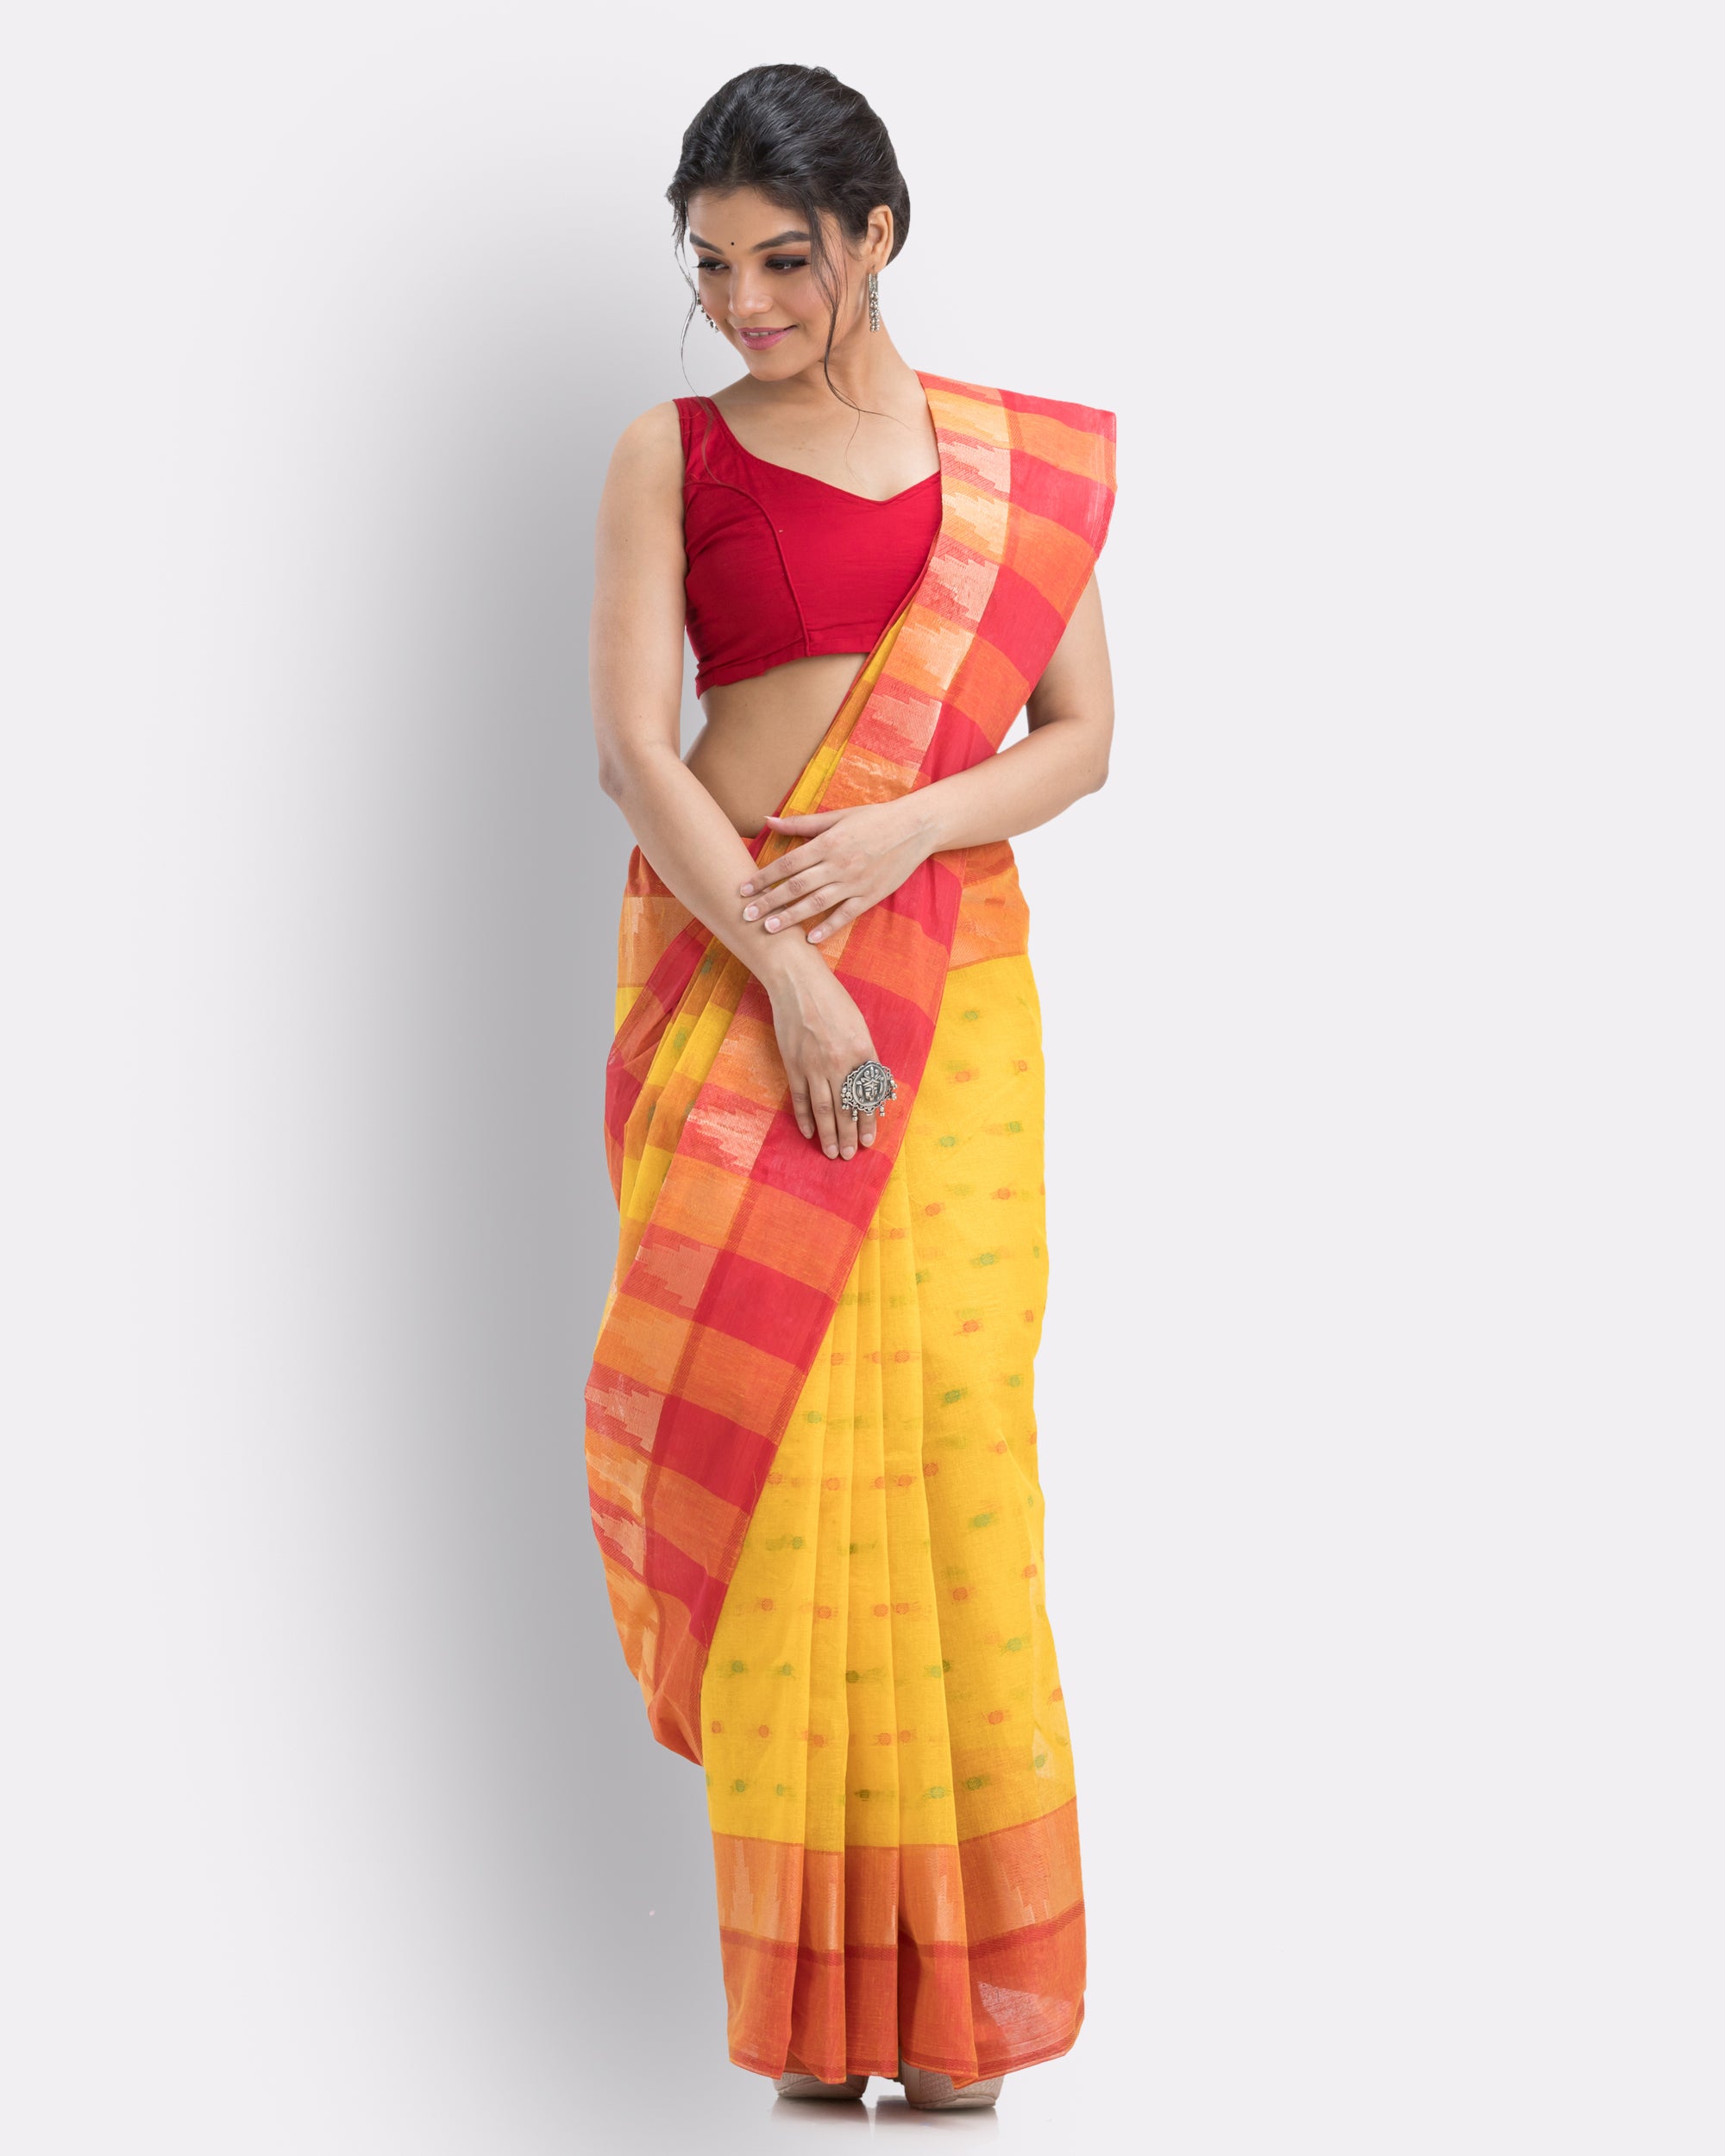 Women's Self Design Tant Pure Cotton Saree (Yellow) - Angoshobha